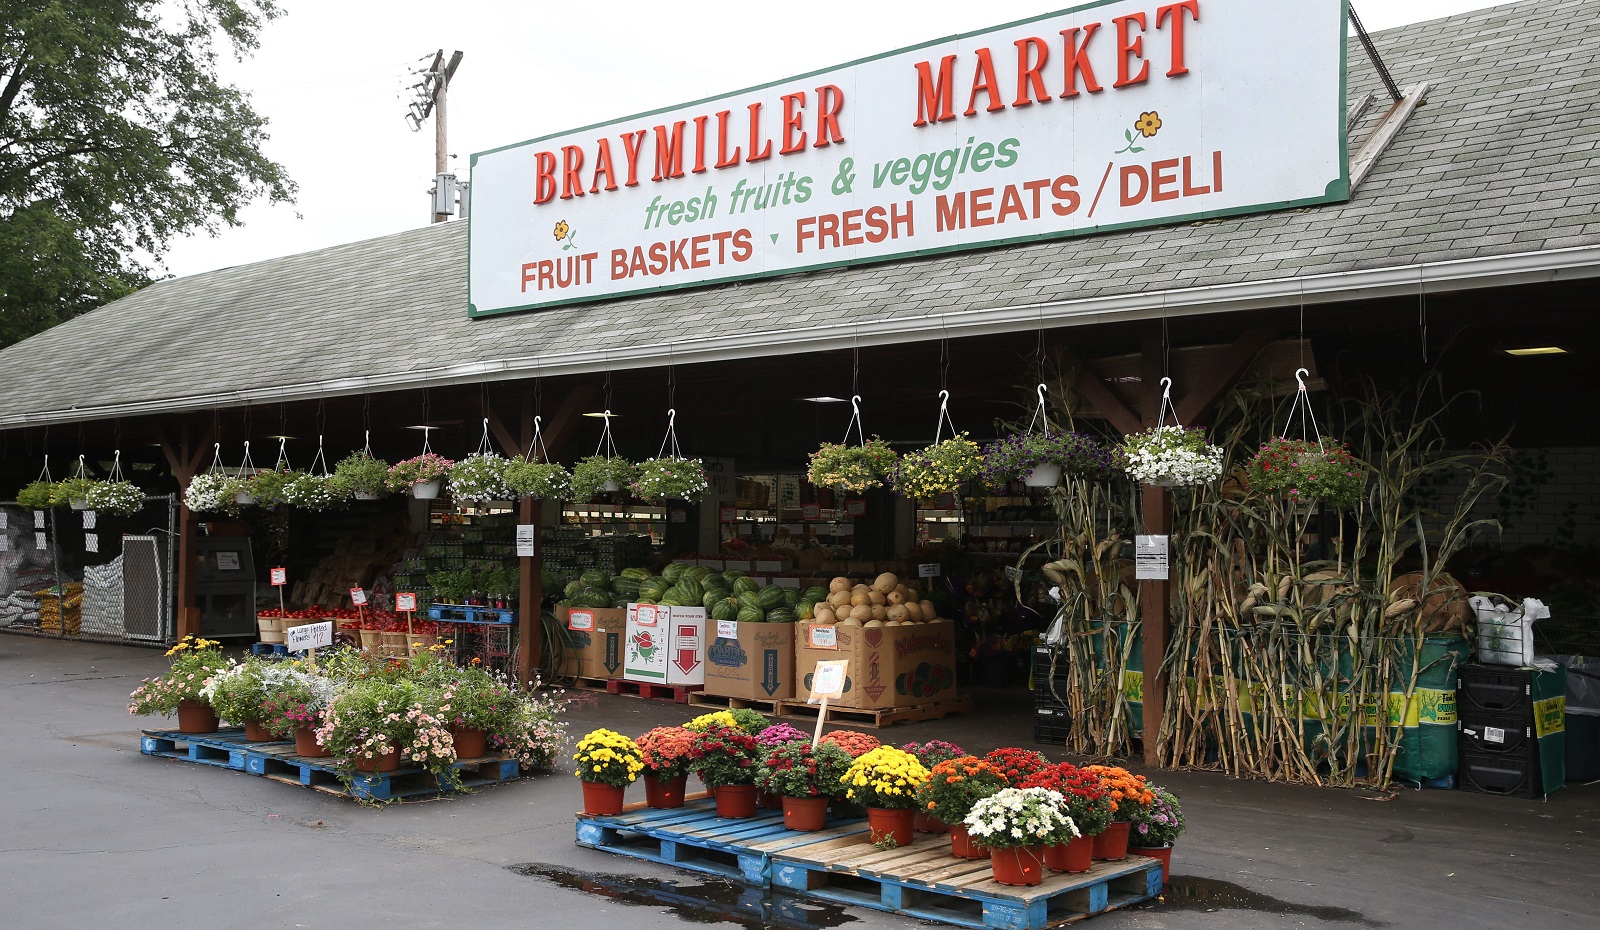 Local Review: Braymiller Market in Hamburg, NY